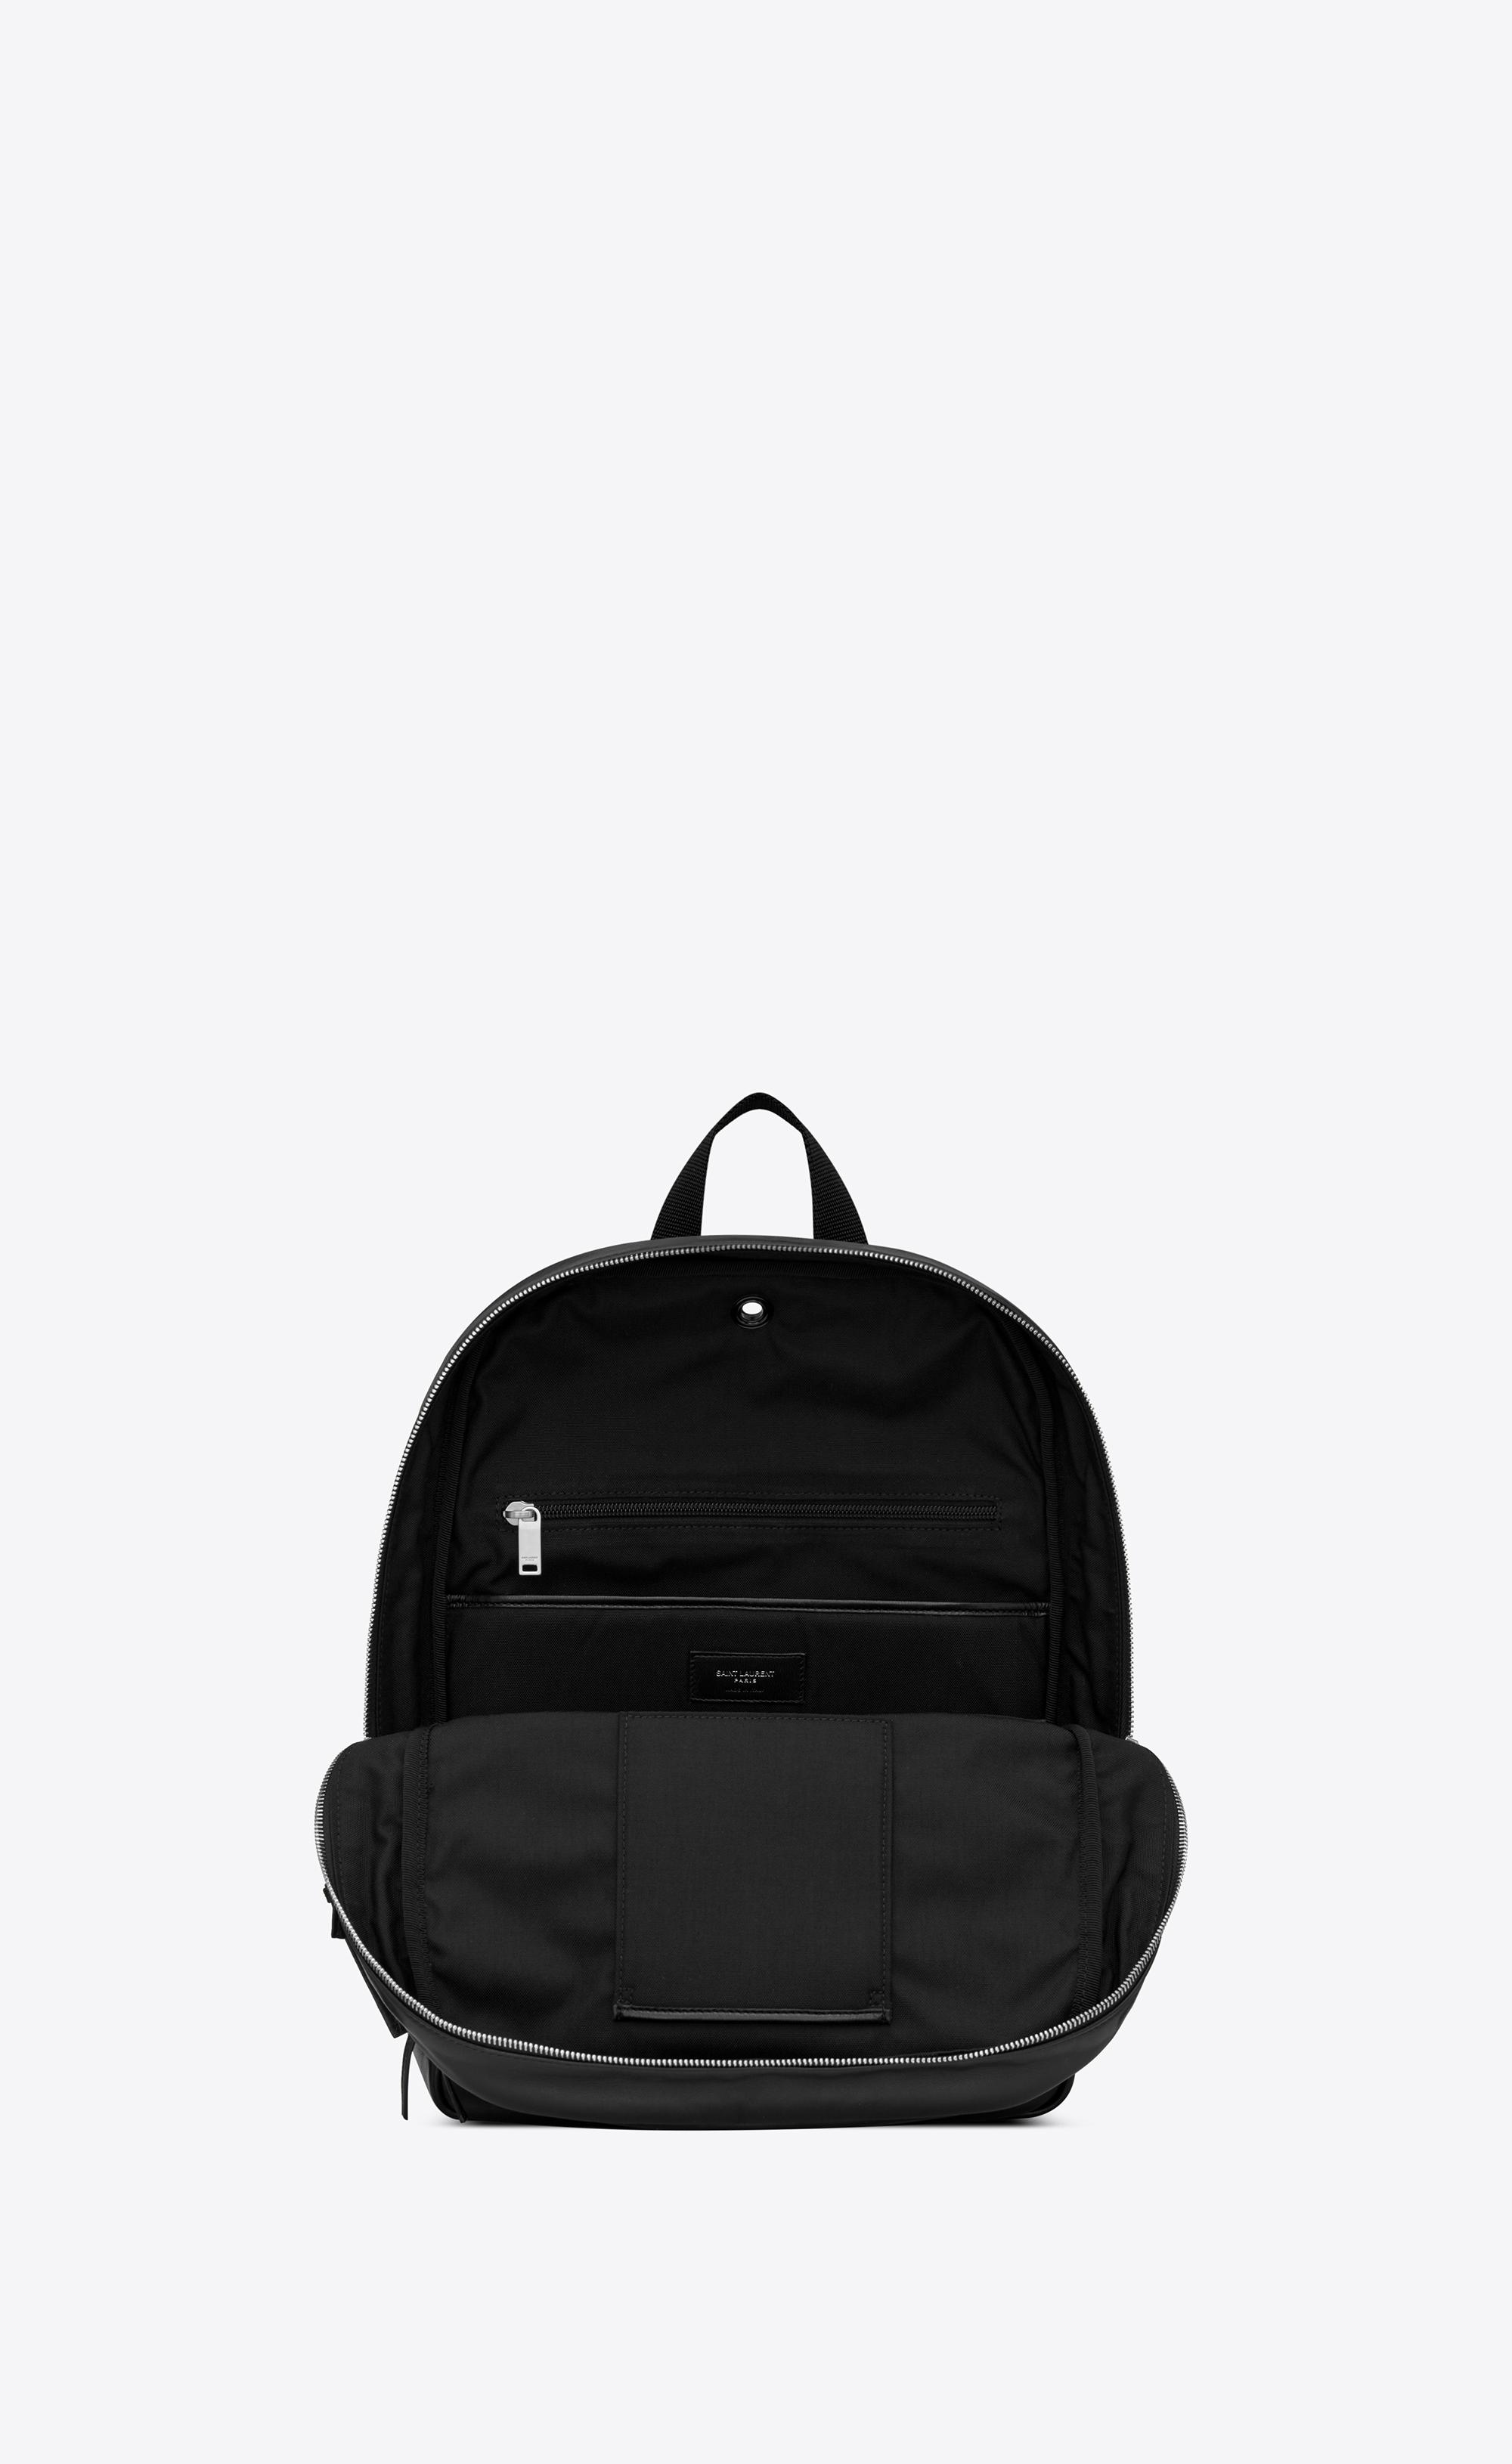 Saint Laurent - Black Smooth Leather Backpack